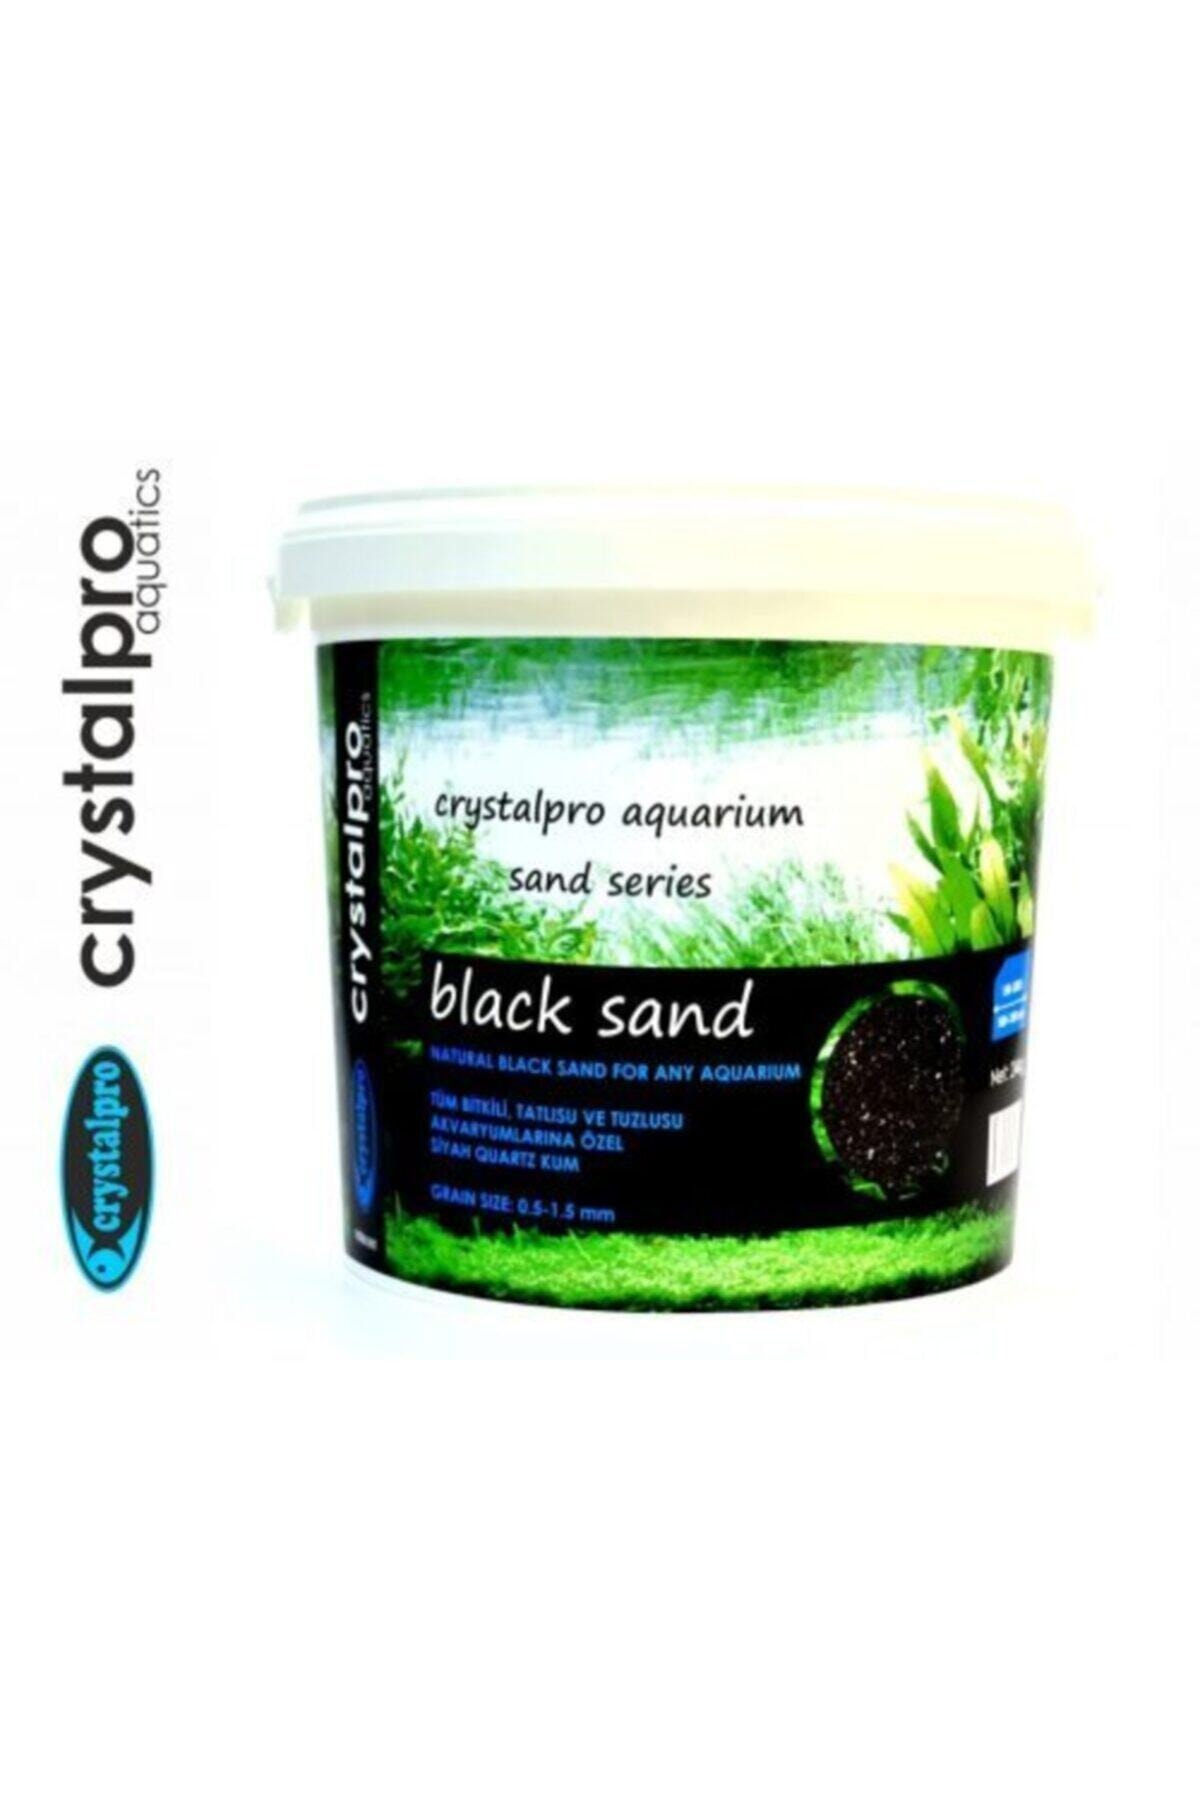 Crystalpro Profesyonel Siyah Akvaryum Bitki Kumu 25 Kg Black Sand